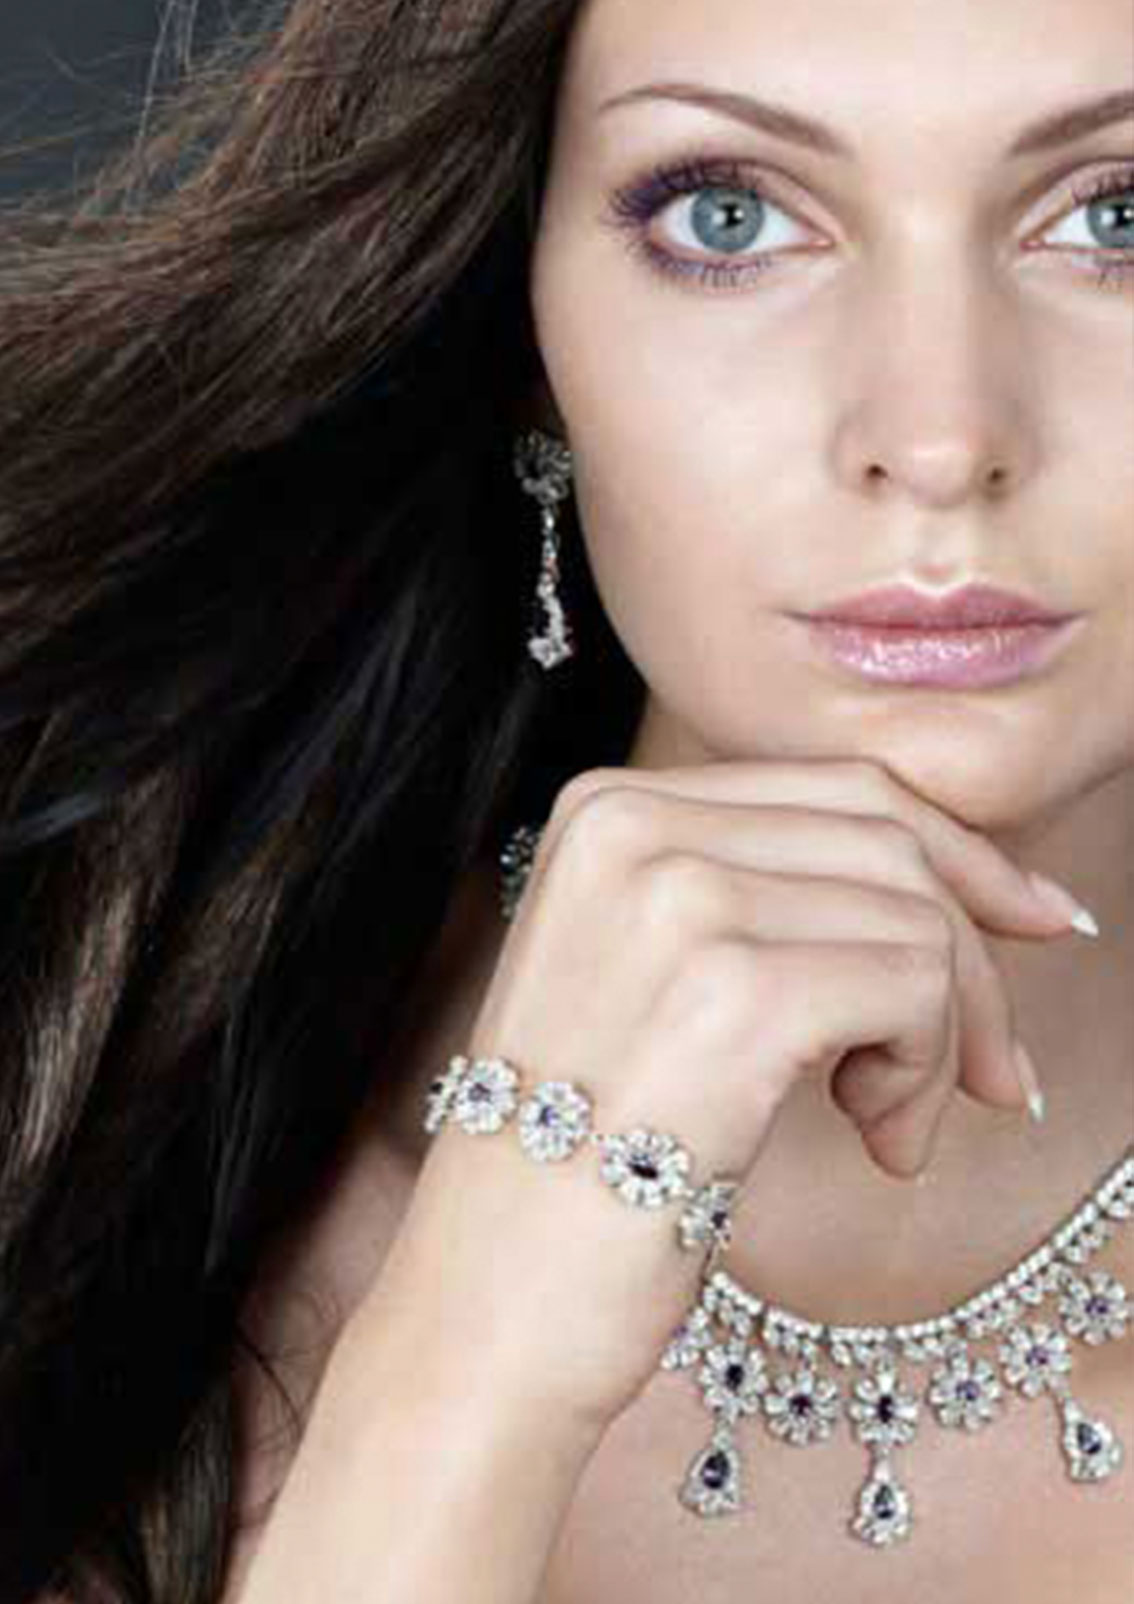 Mercedes Jewelry